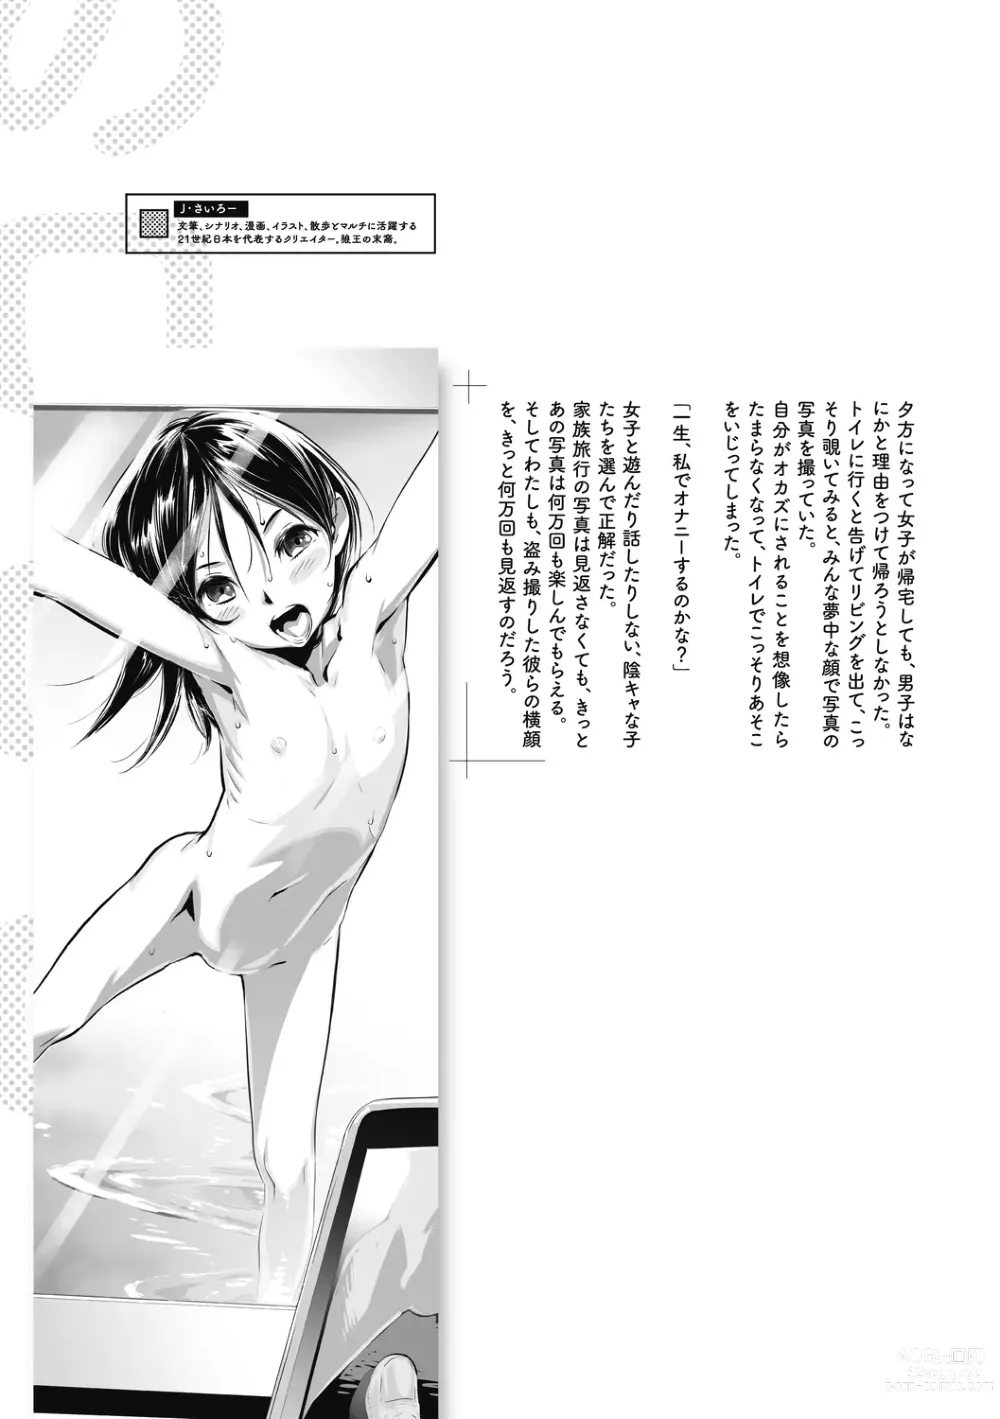 Page 91 of manga Little Girl Strike Vol. 27